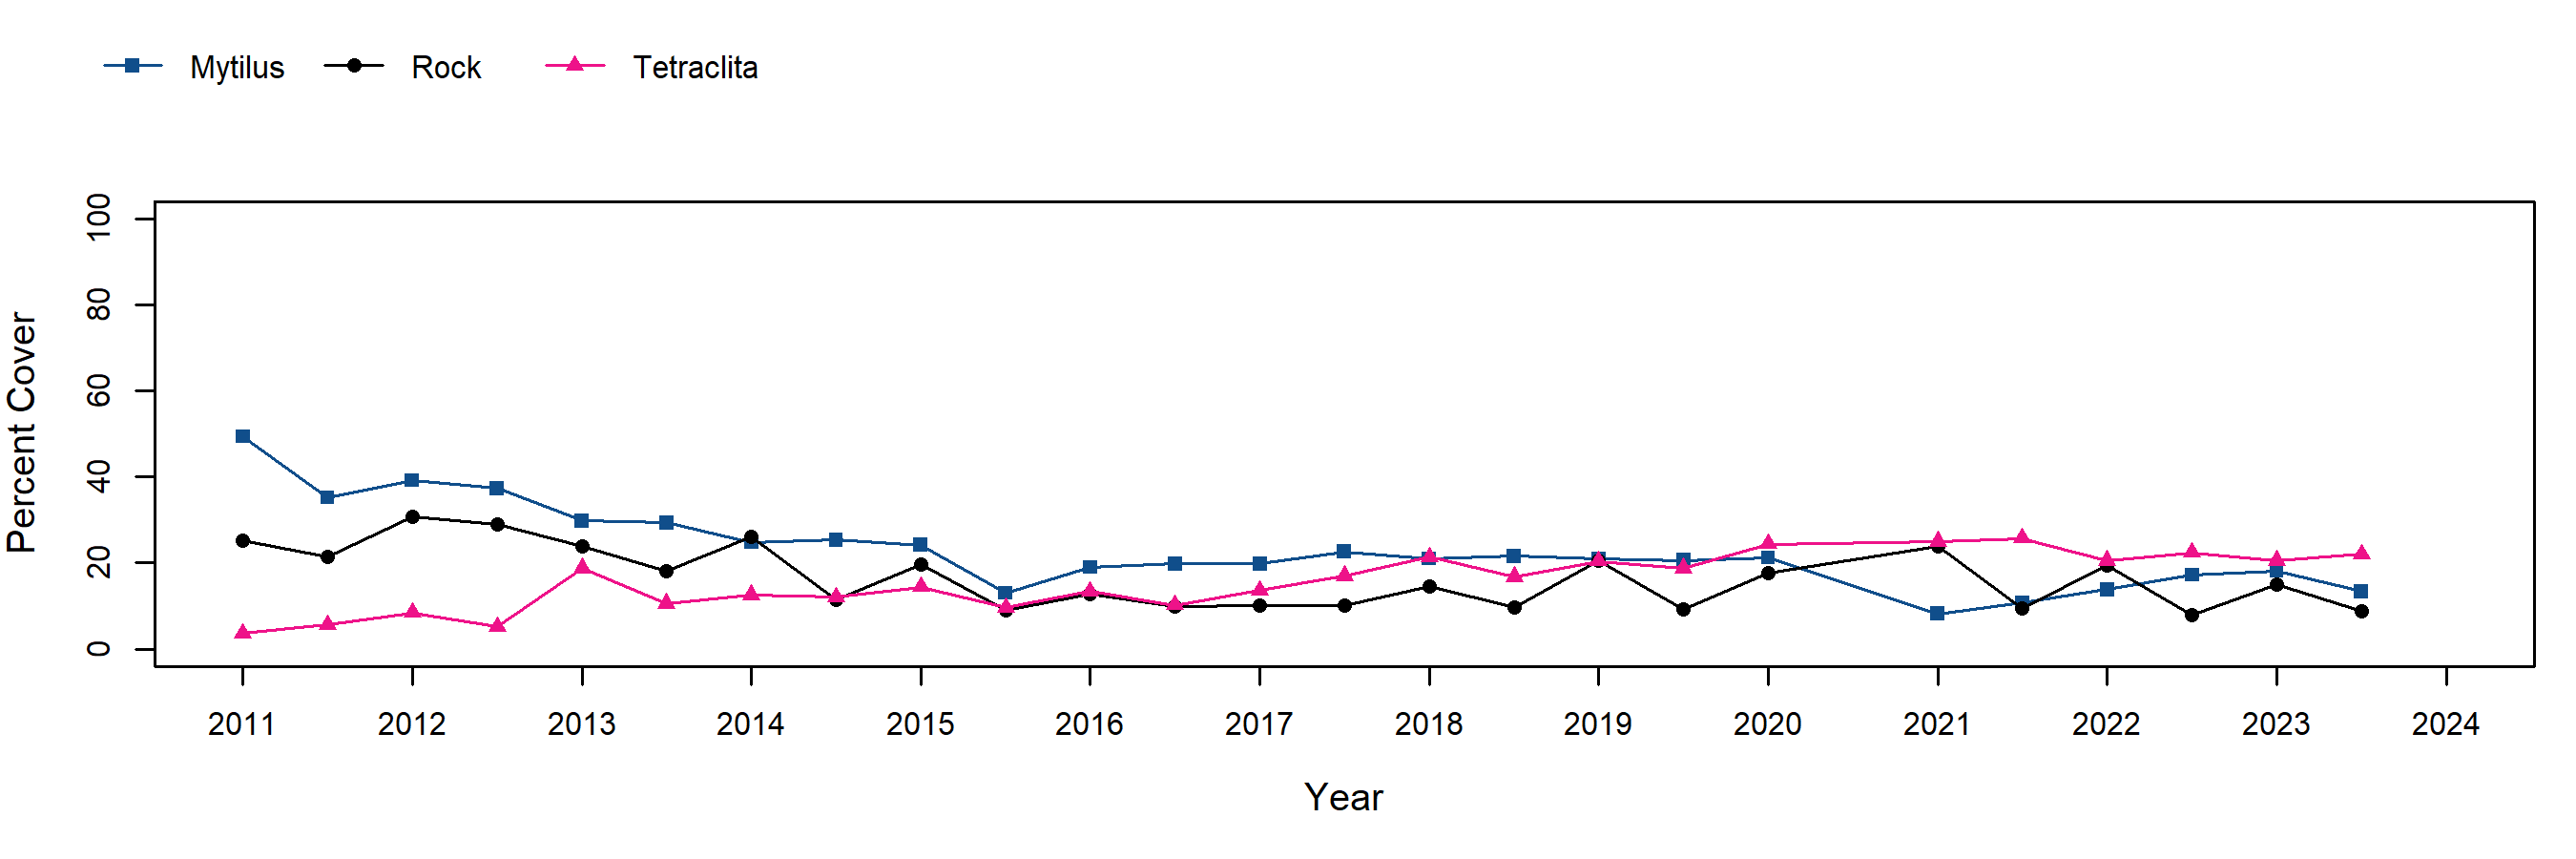 Eel Point Mytilus trend plot